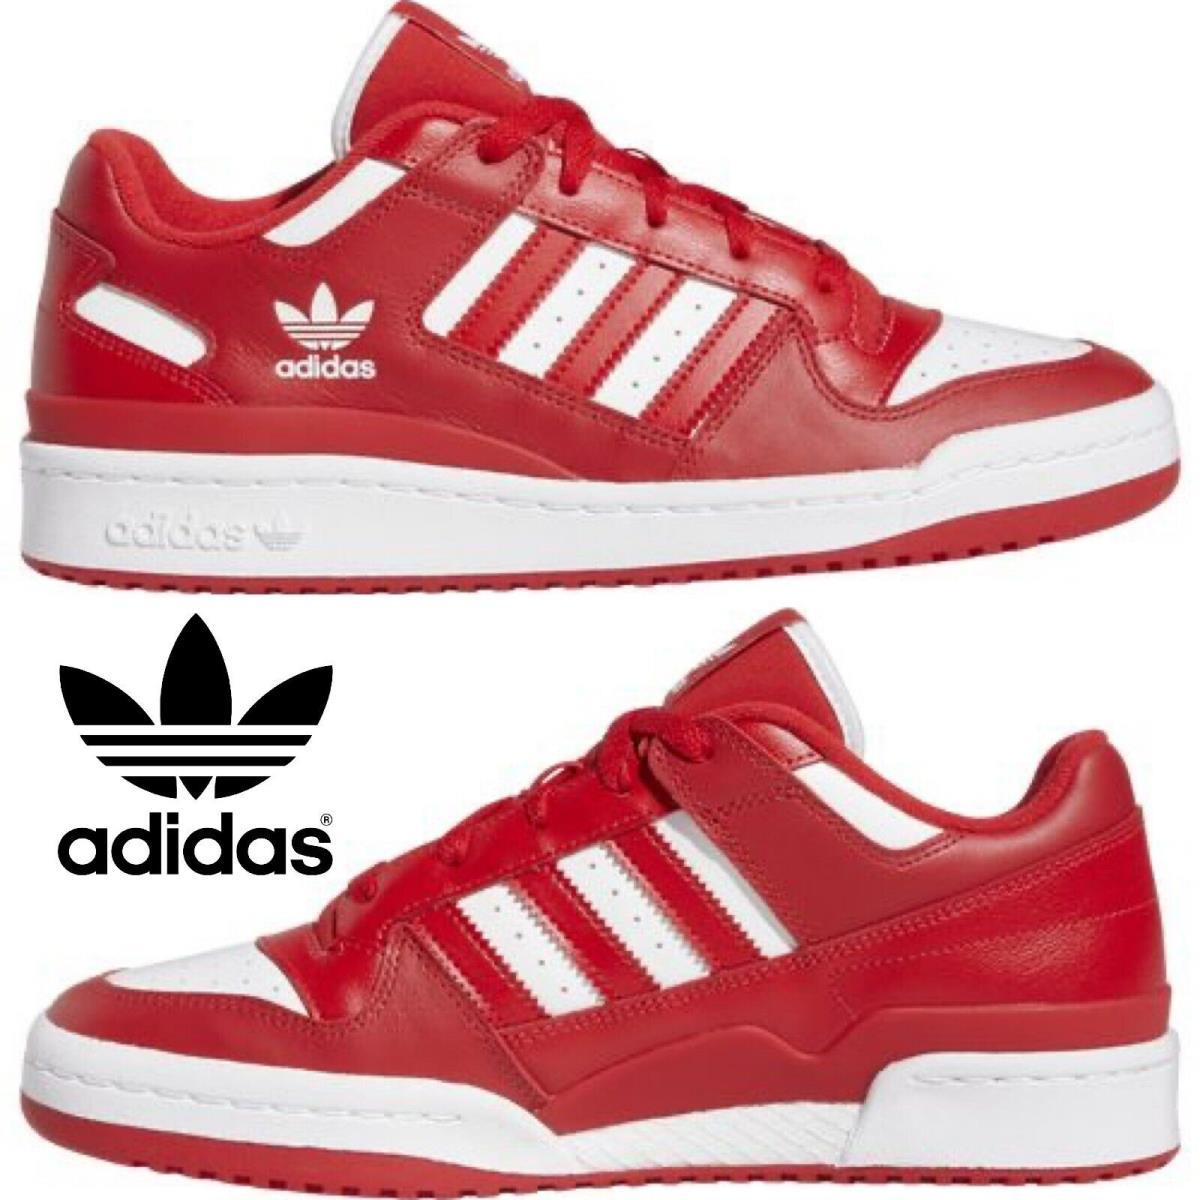 Adidas Originals Forum Low Men`s Sneakers Comfort Sport Casual Shoes Black White - Red, Manufacturer: Scarlet / Cloud White / Scarlet